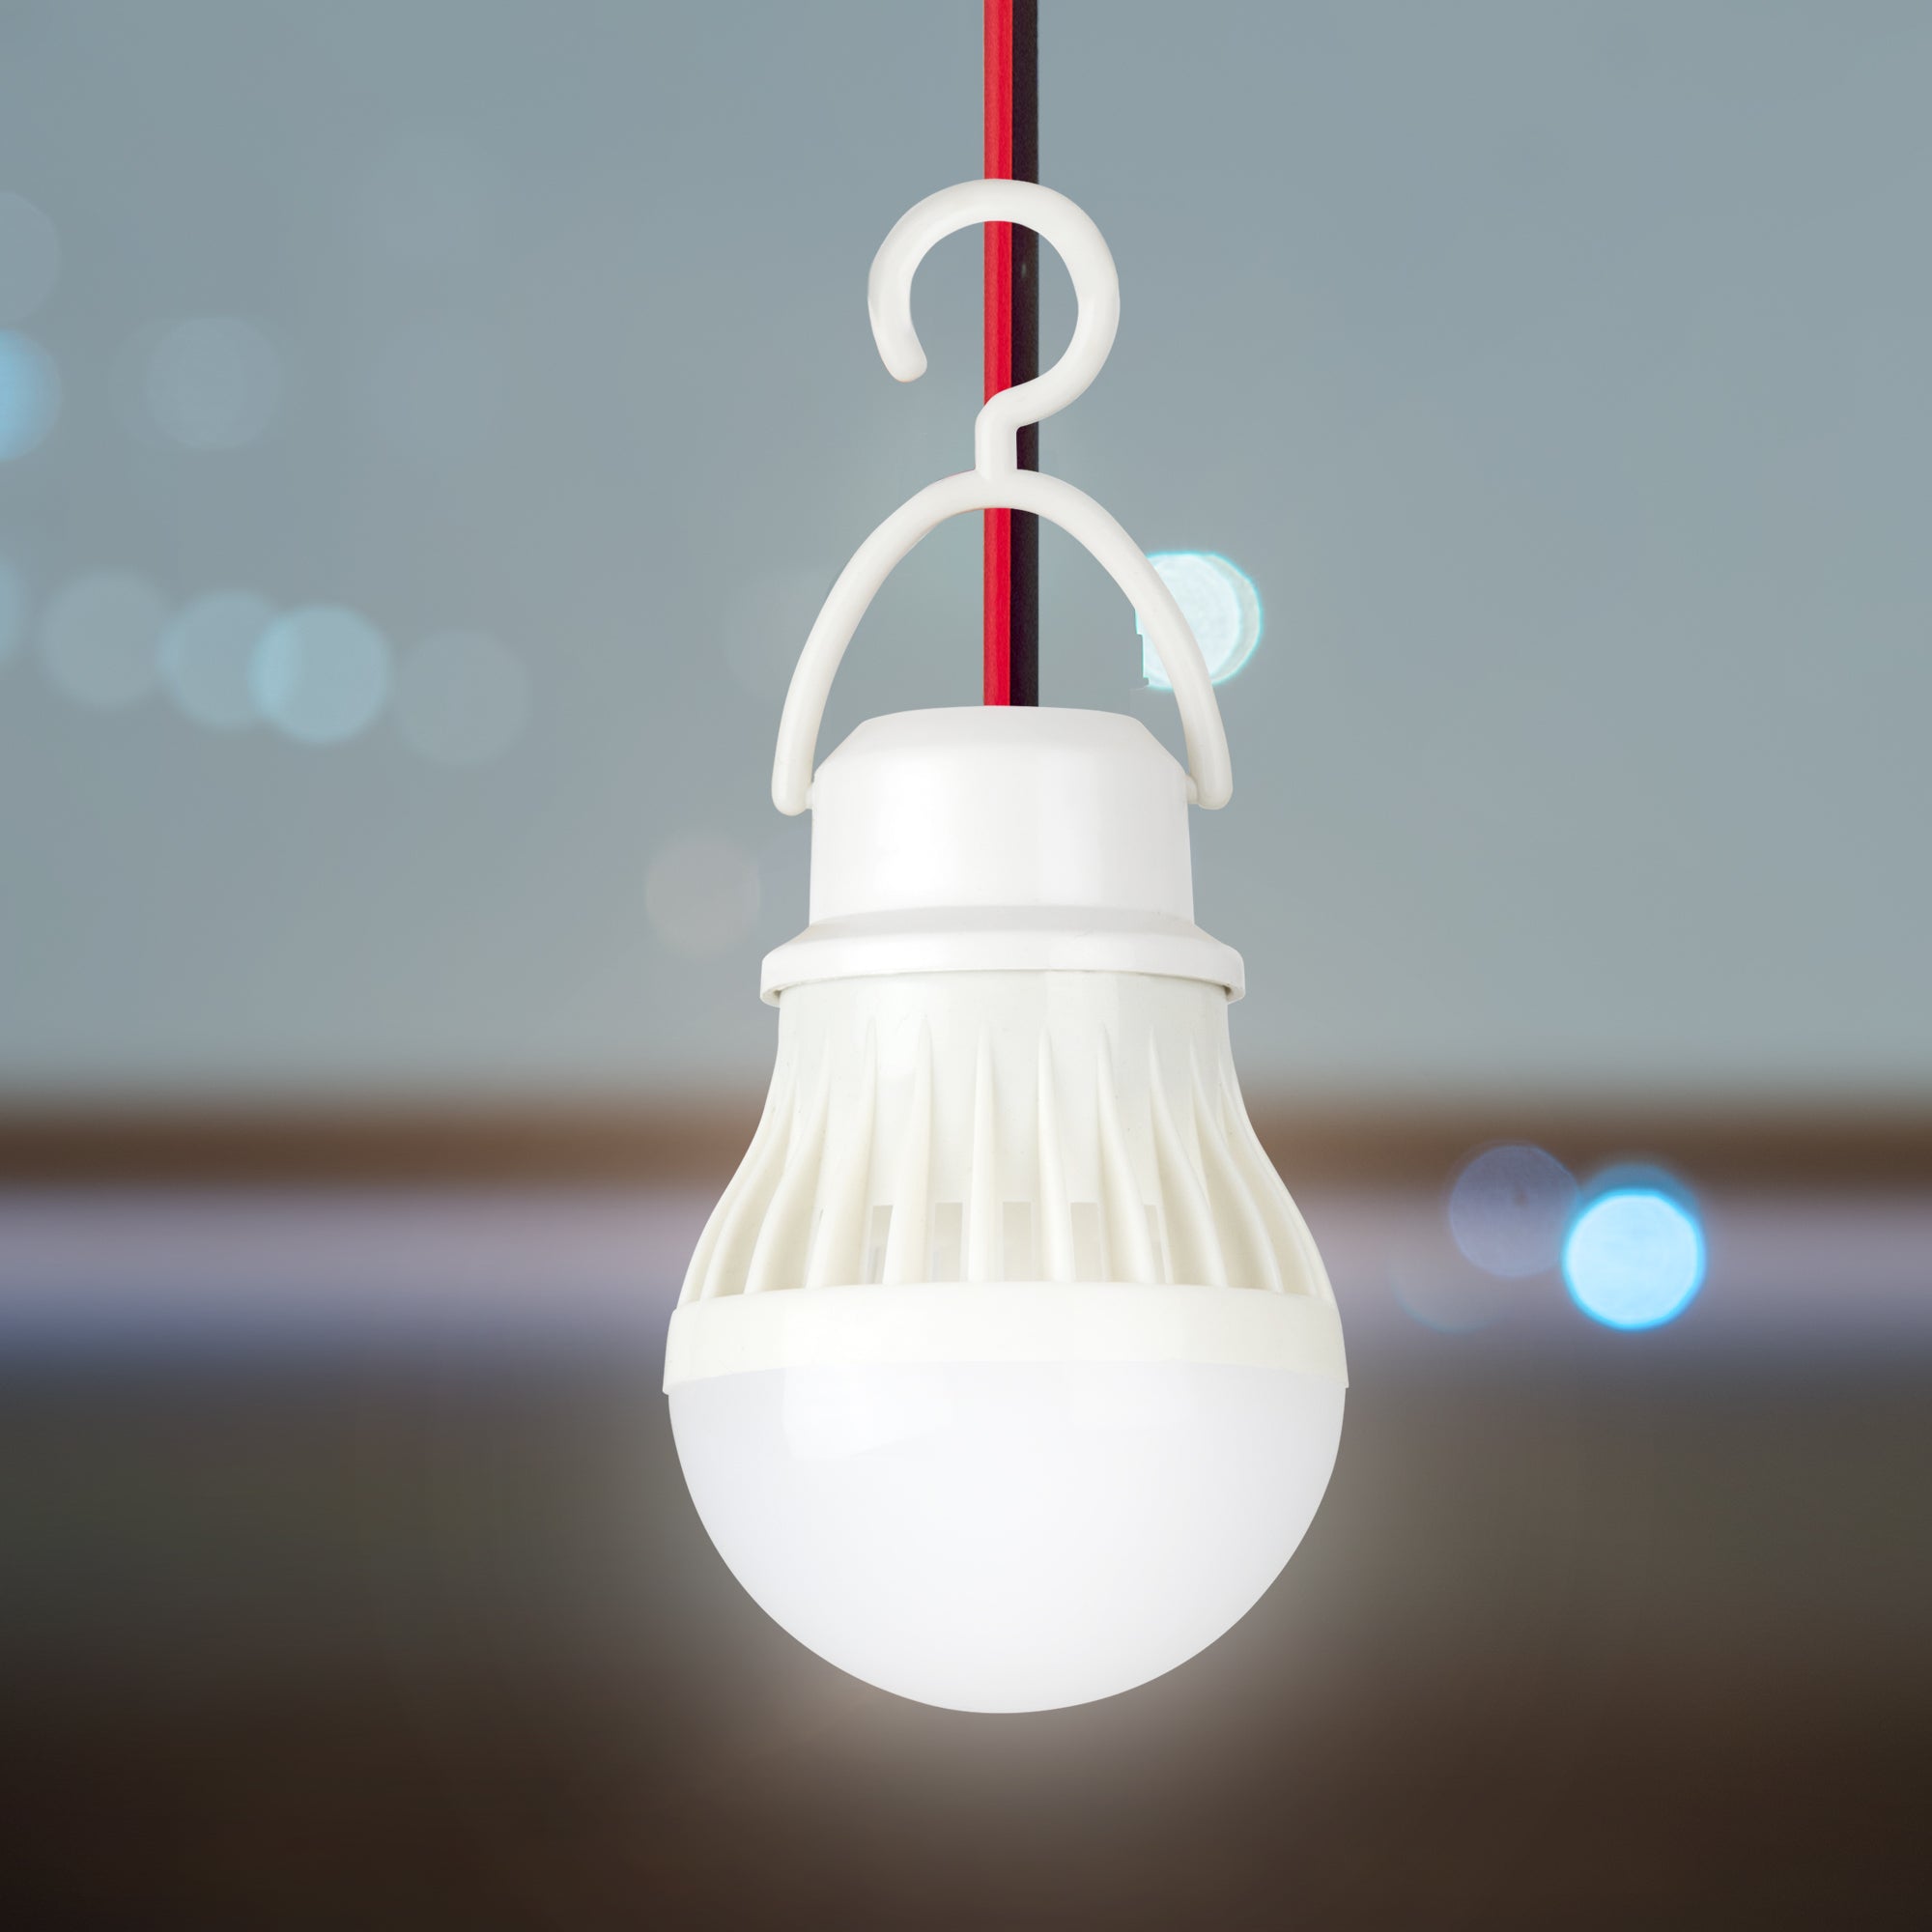 Rechargeable Emergency Portable LED Light Bulb